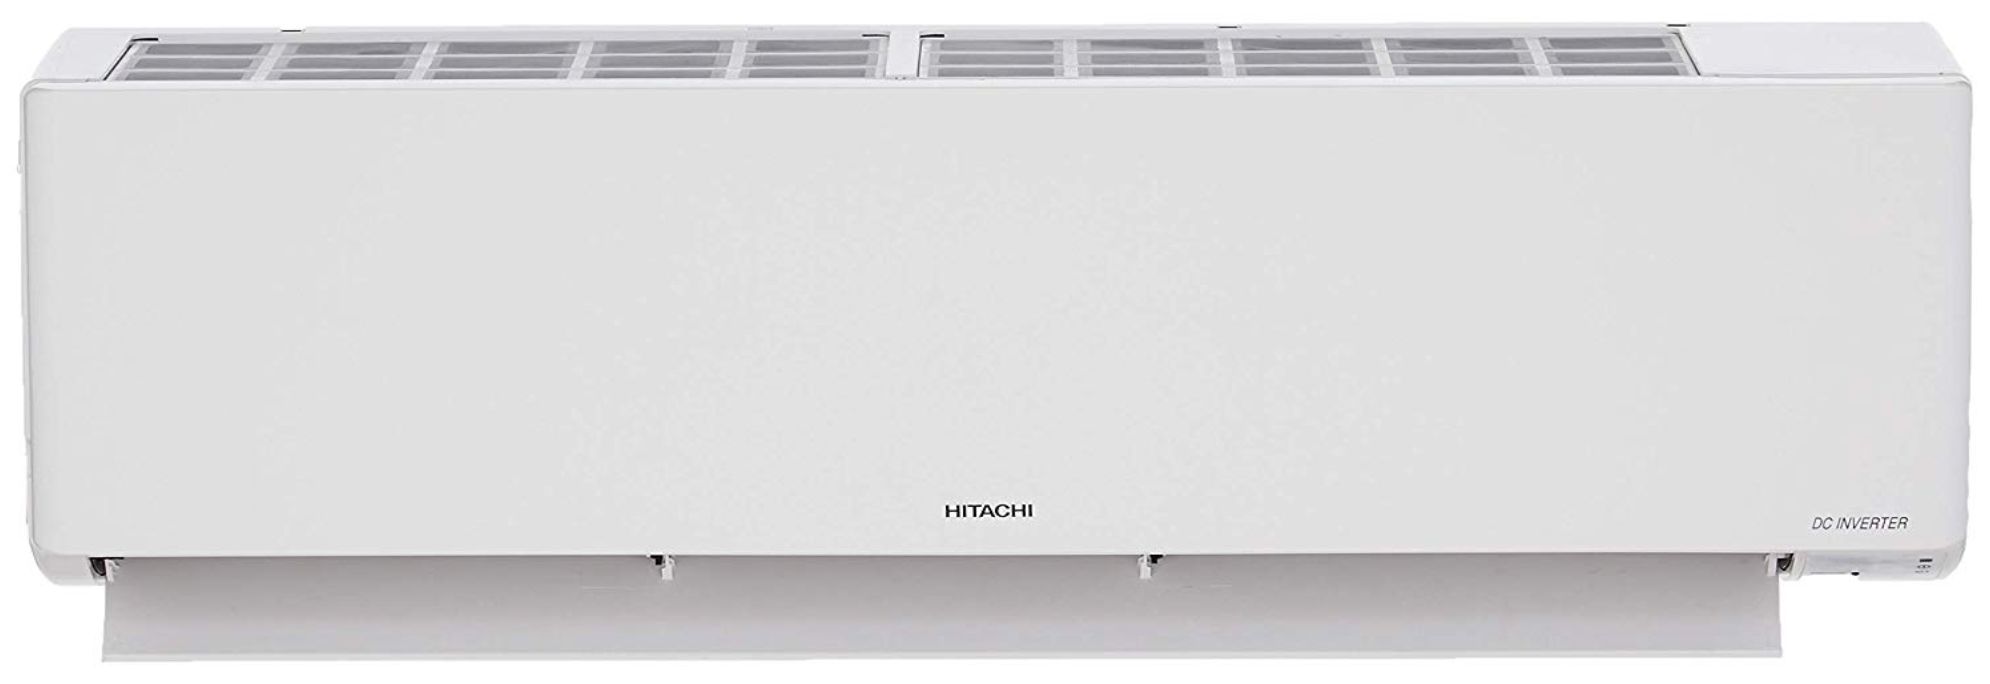 Best AC in India - Hitachi RSD317HCEA Inverter Split AC